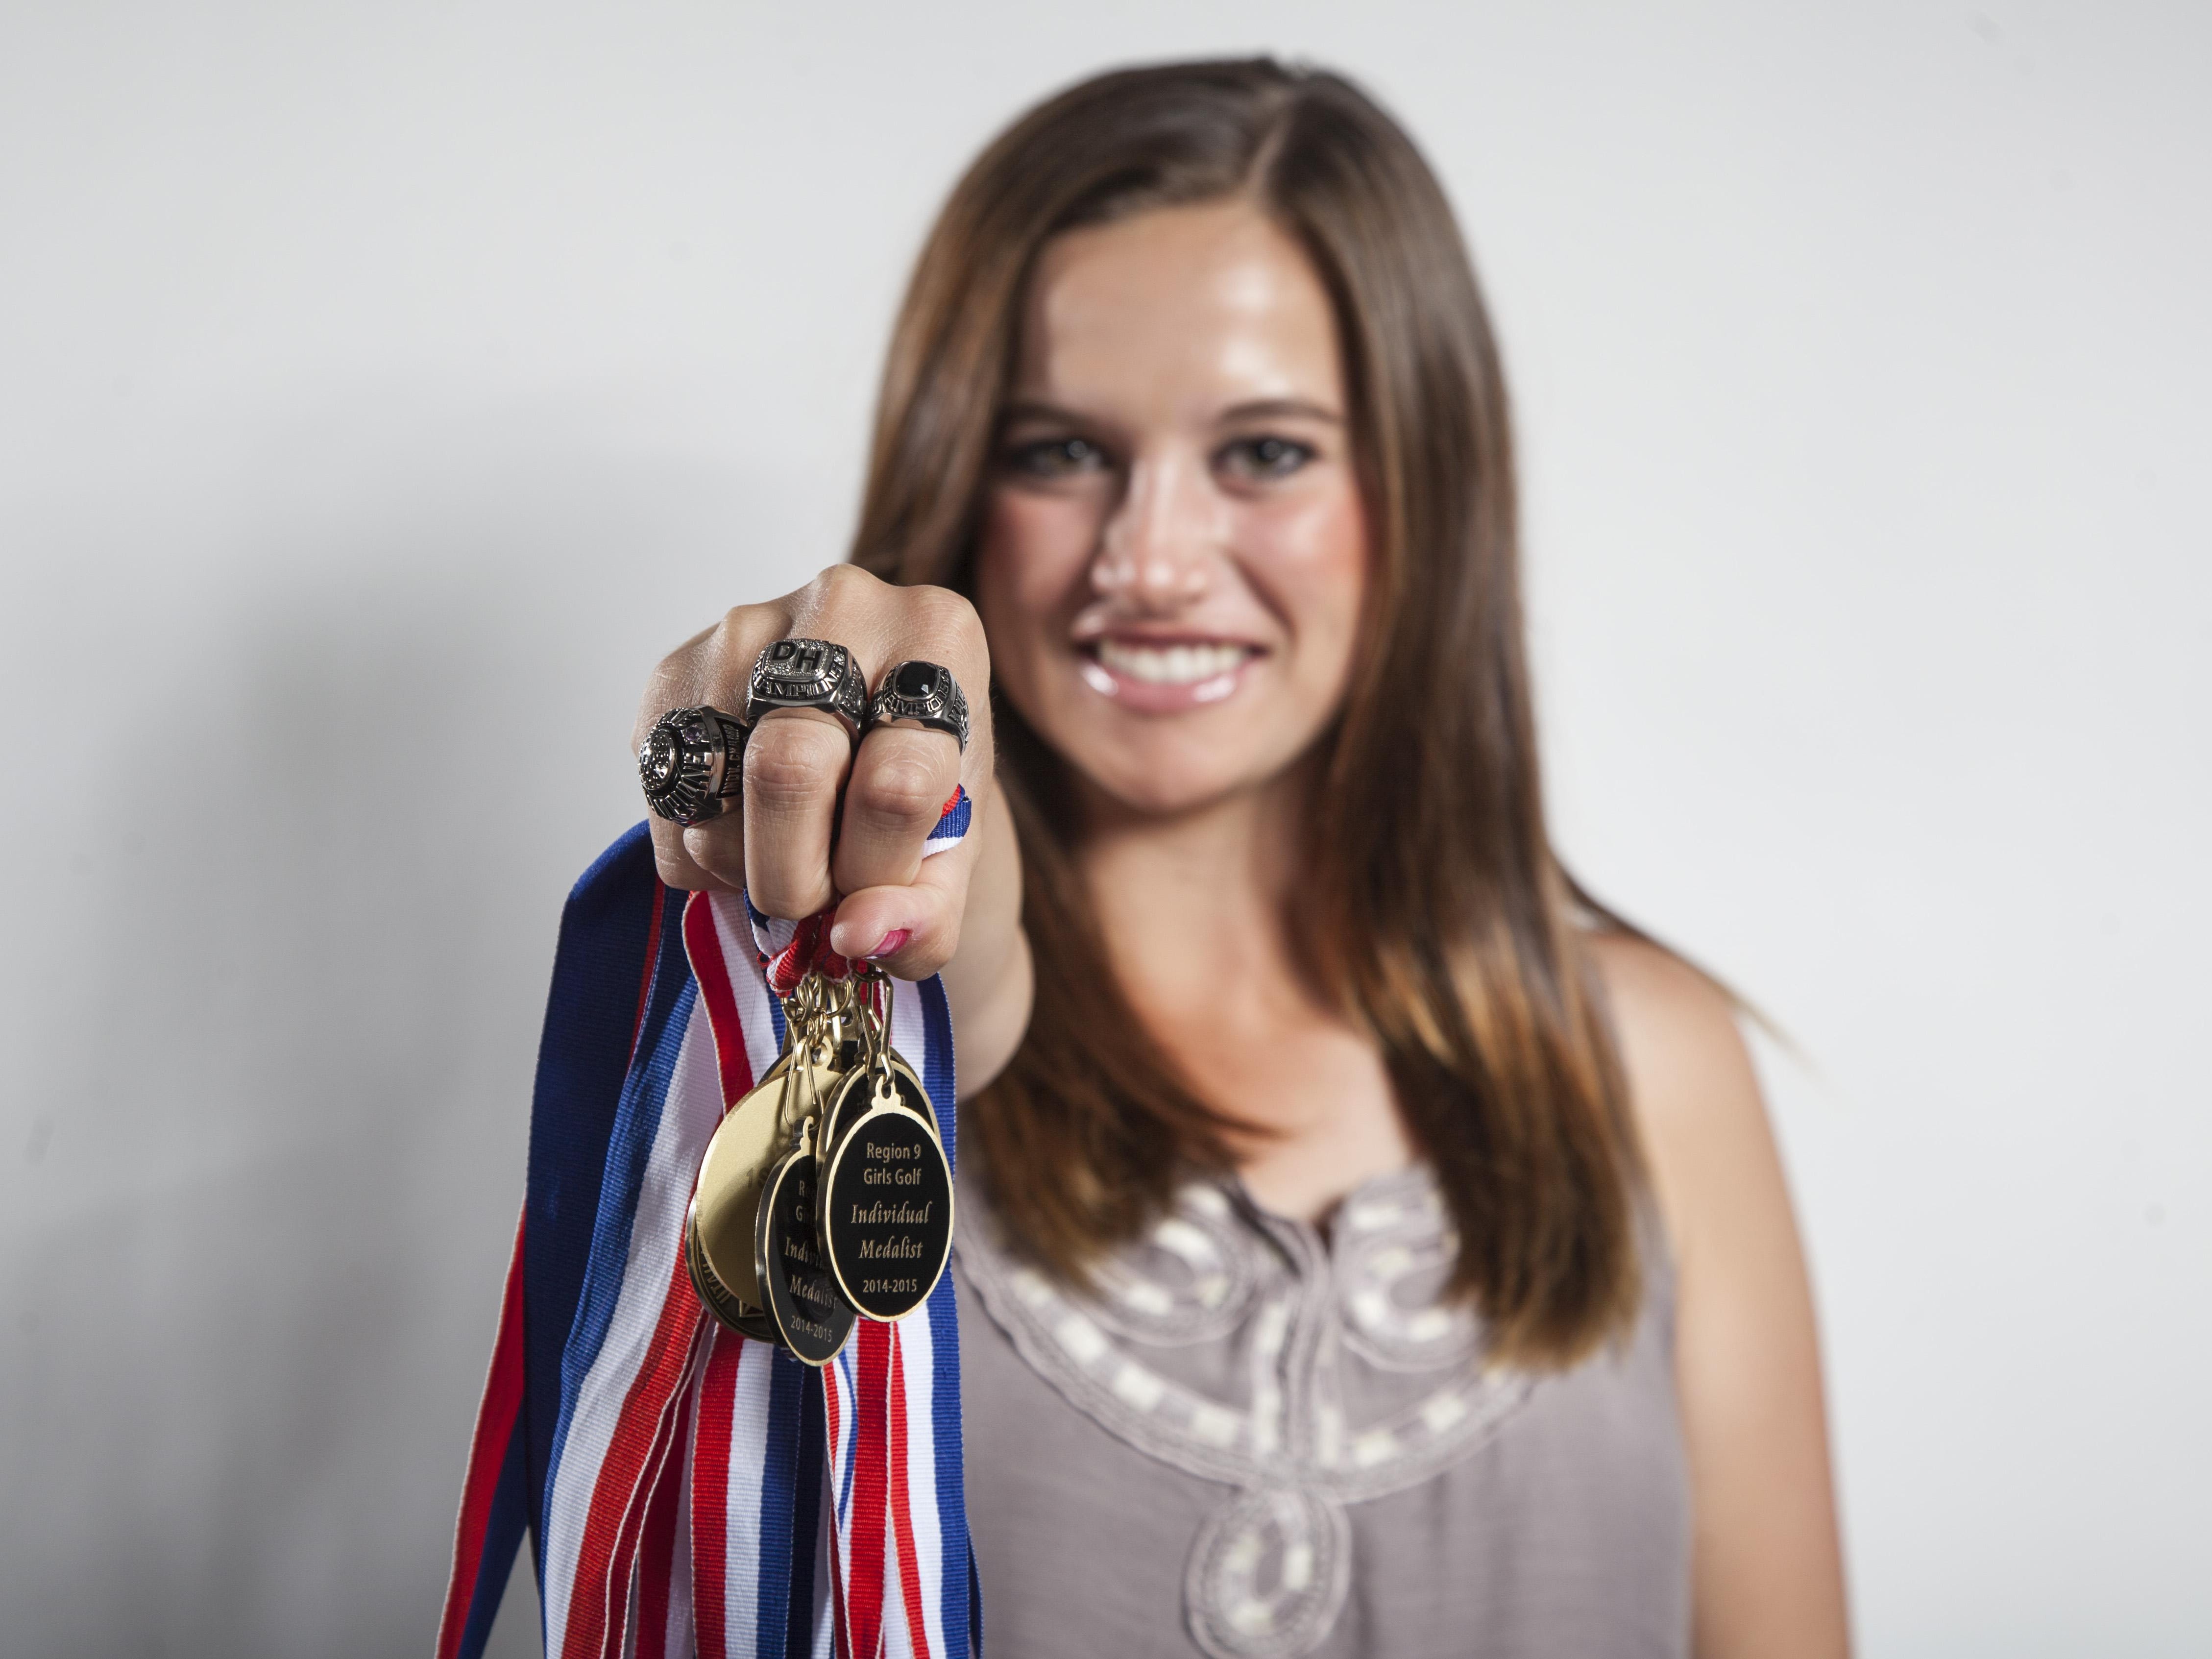 Katie Perkins has three individual state titles and helped Desert Hills win its sixth consecutive state championship. Perkins will play at Utah Valley University this upcoming season.